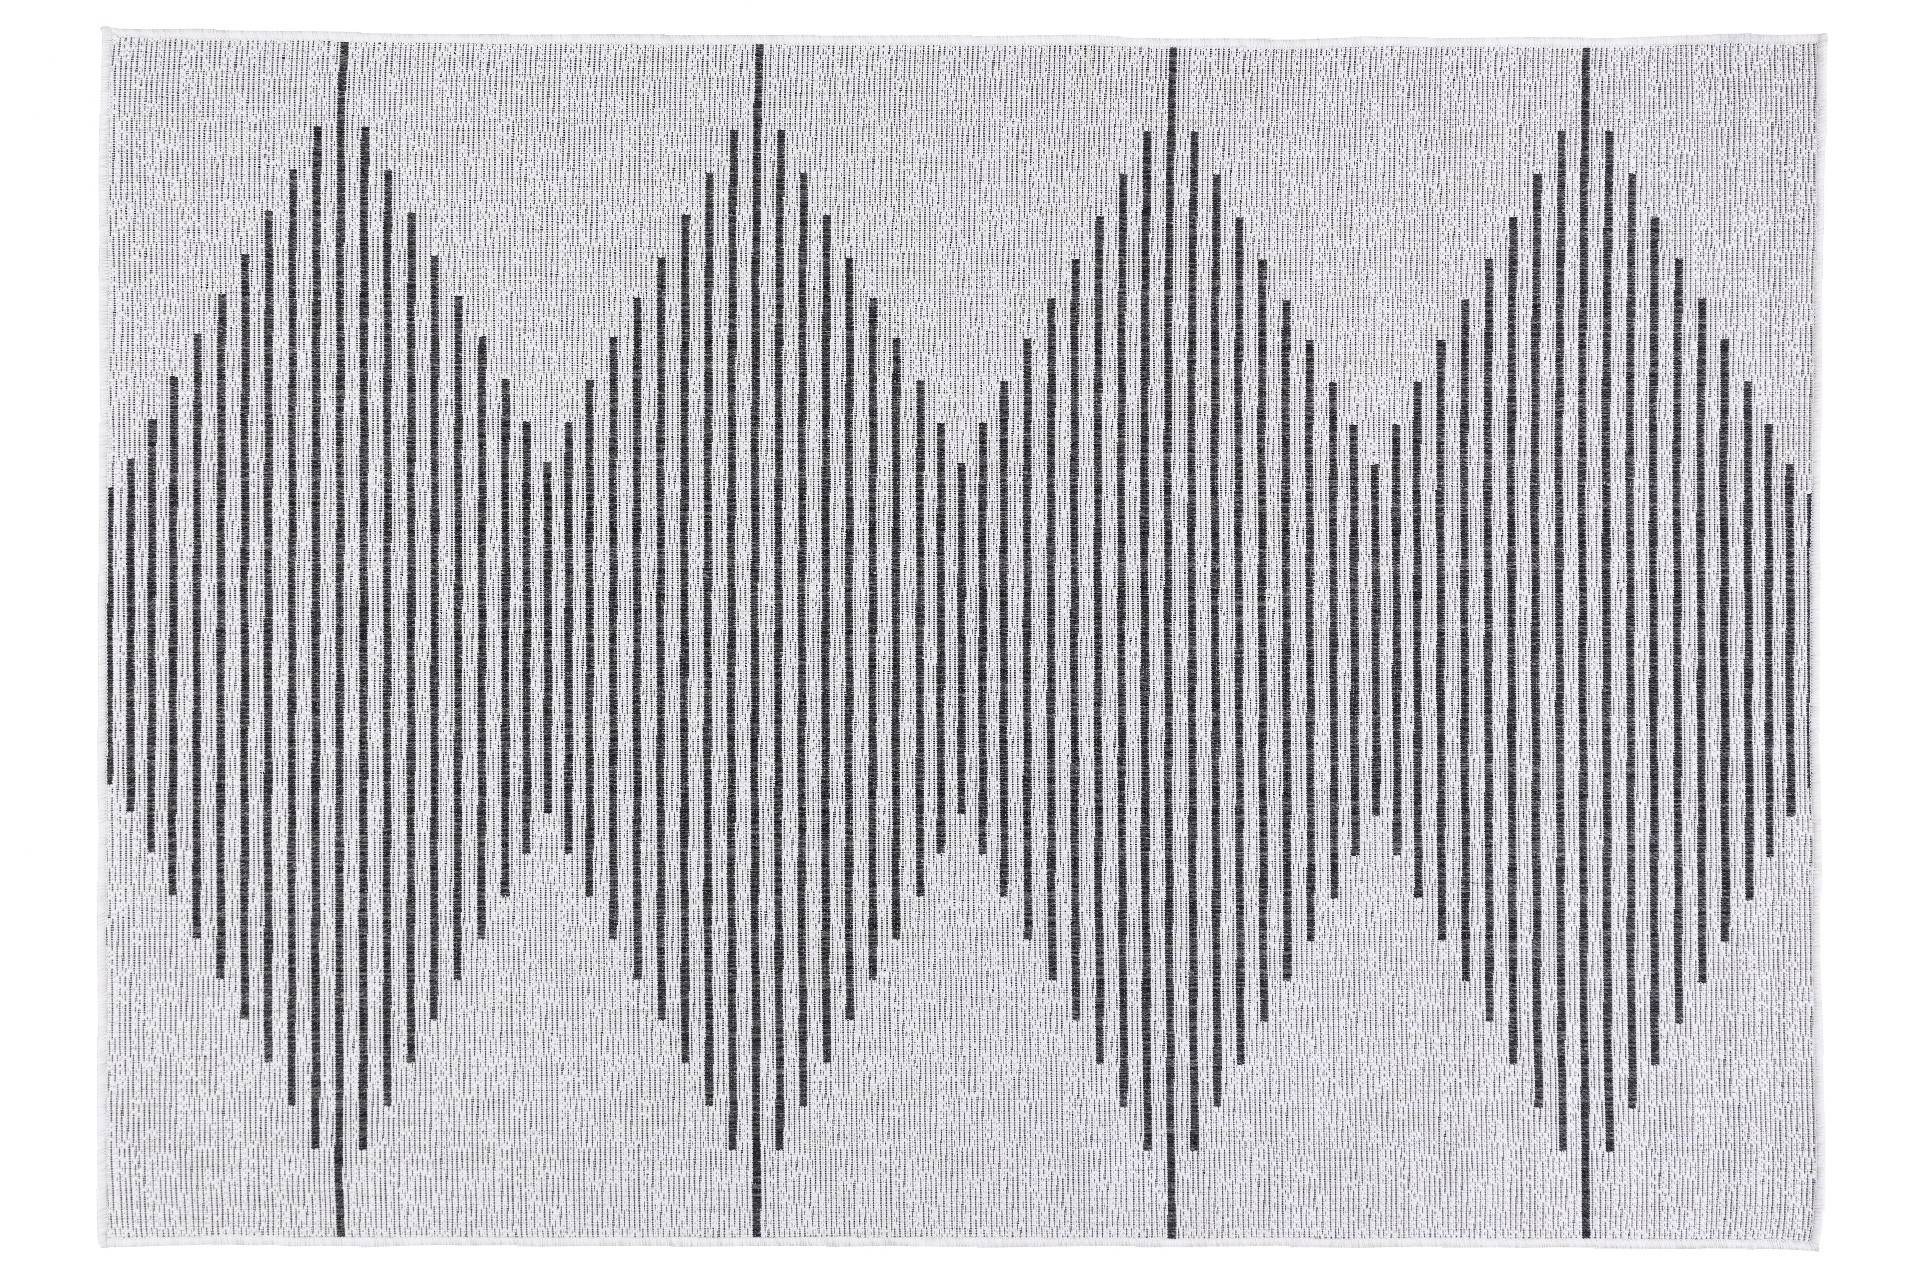 Tapijt Vashti 120x180cm Sisal Losange patroon in zwarte en witte strepen